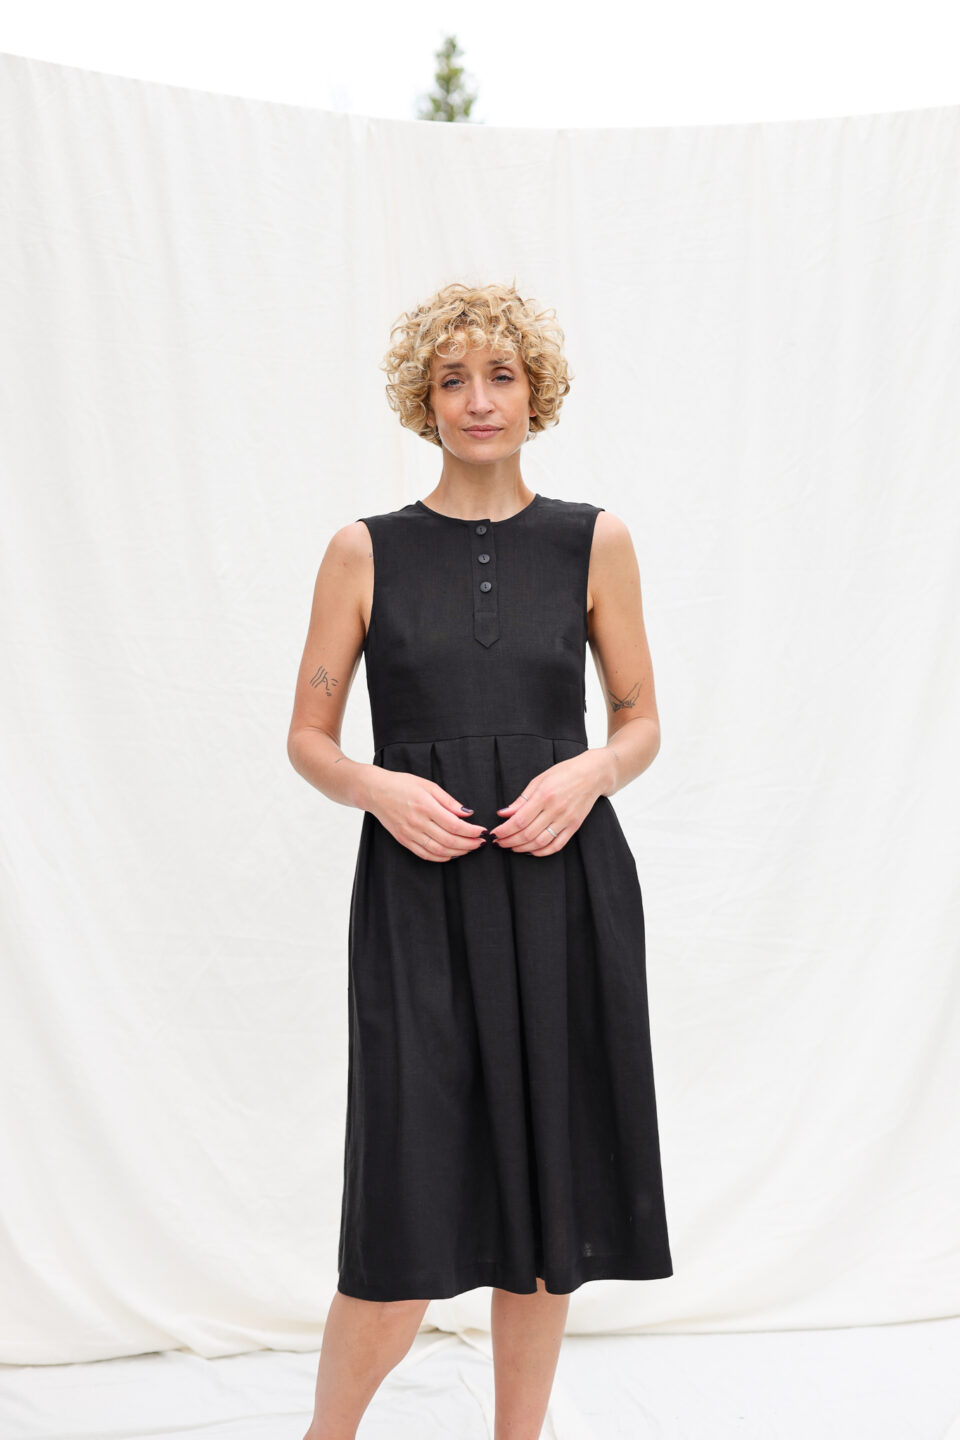 Sleeveless hand pleated skirt black linen dress JUNE | Dress | Sustainable clothing | OffOn clothing